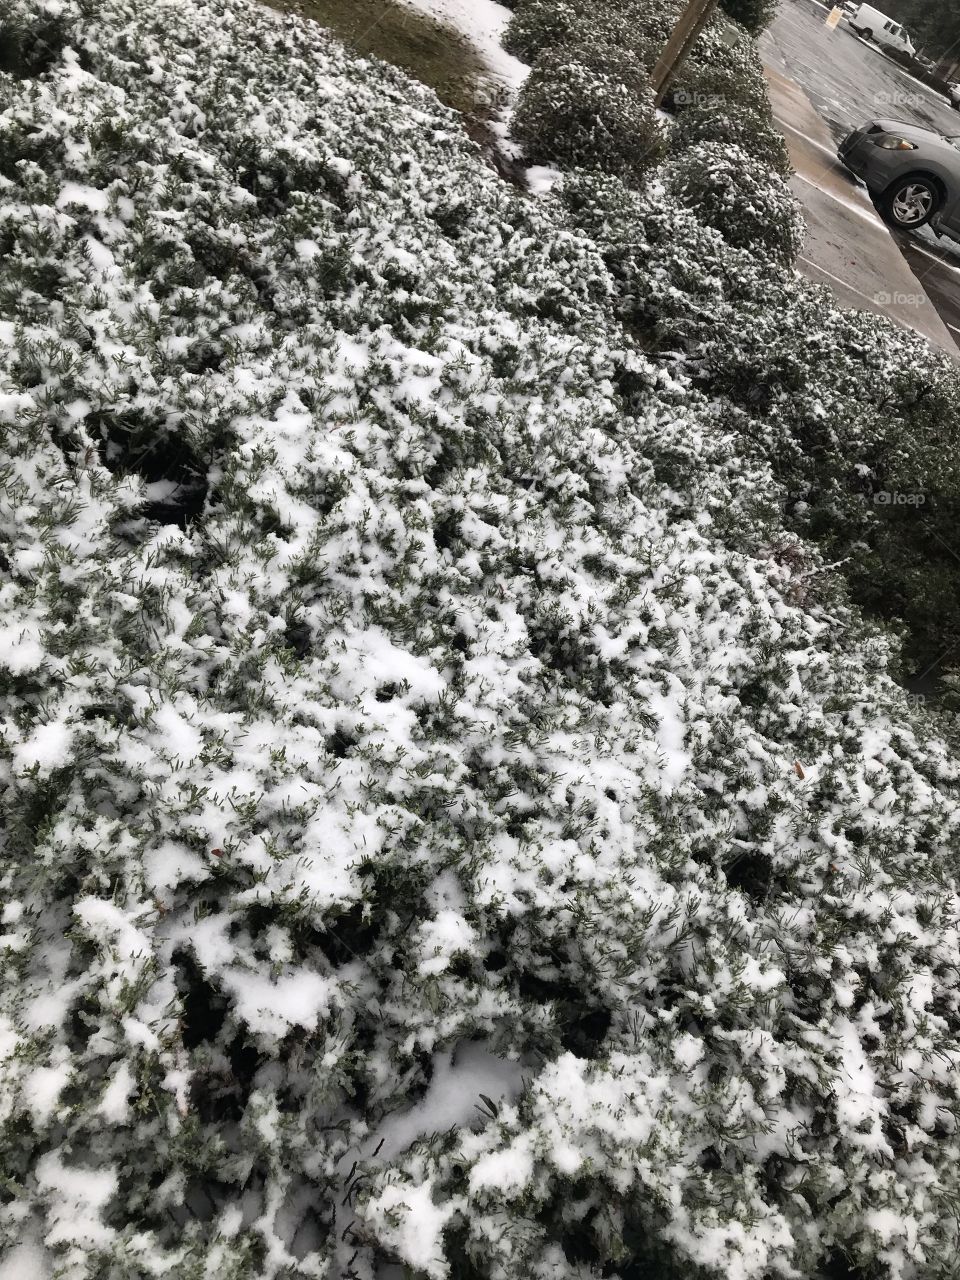 Snow covered bush!